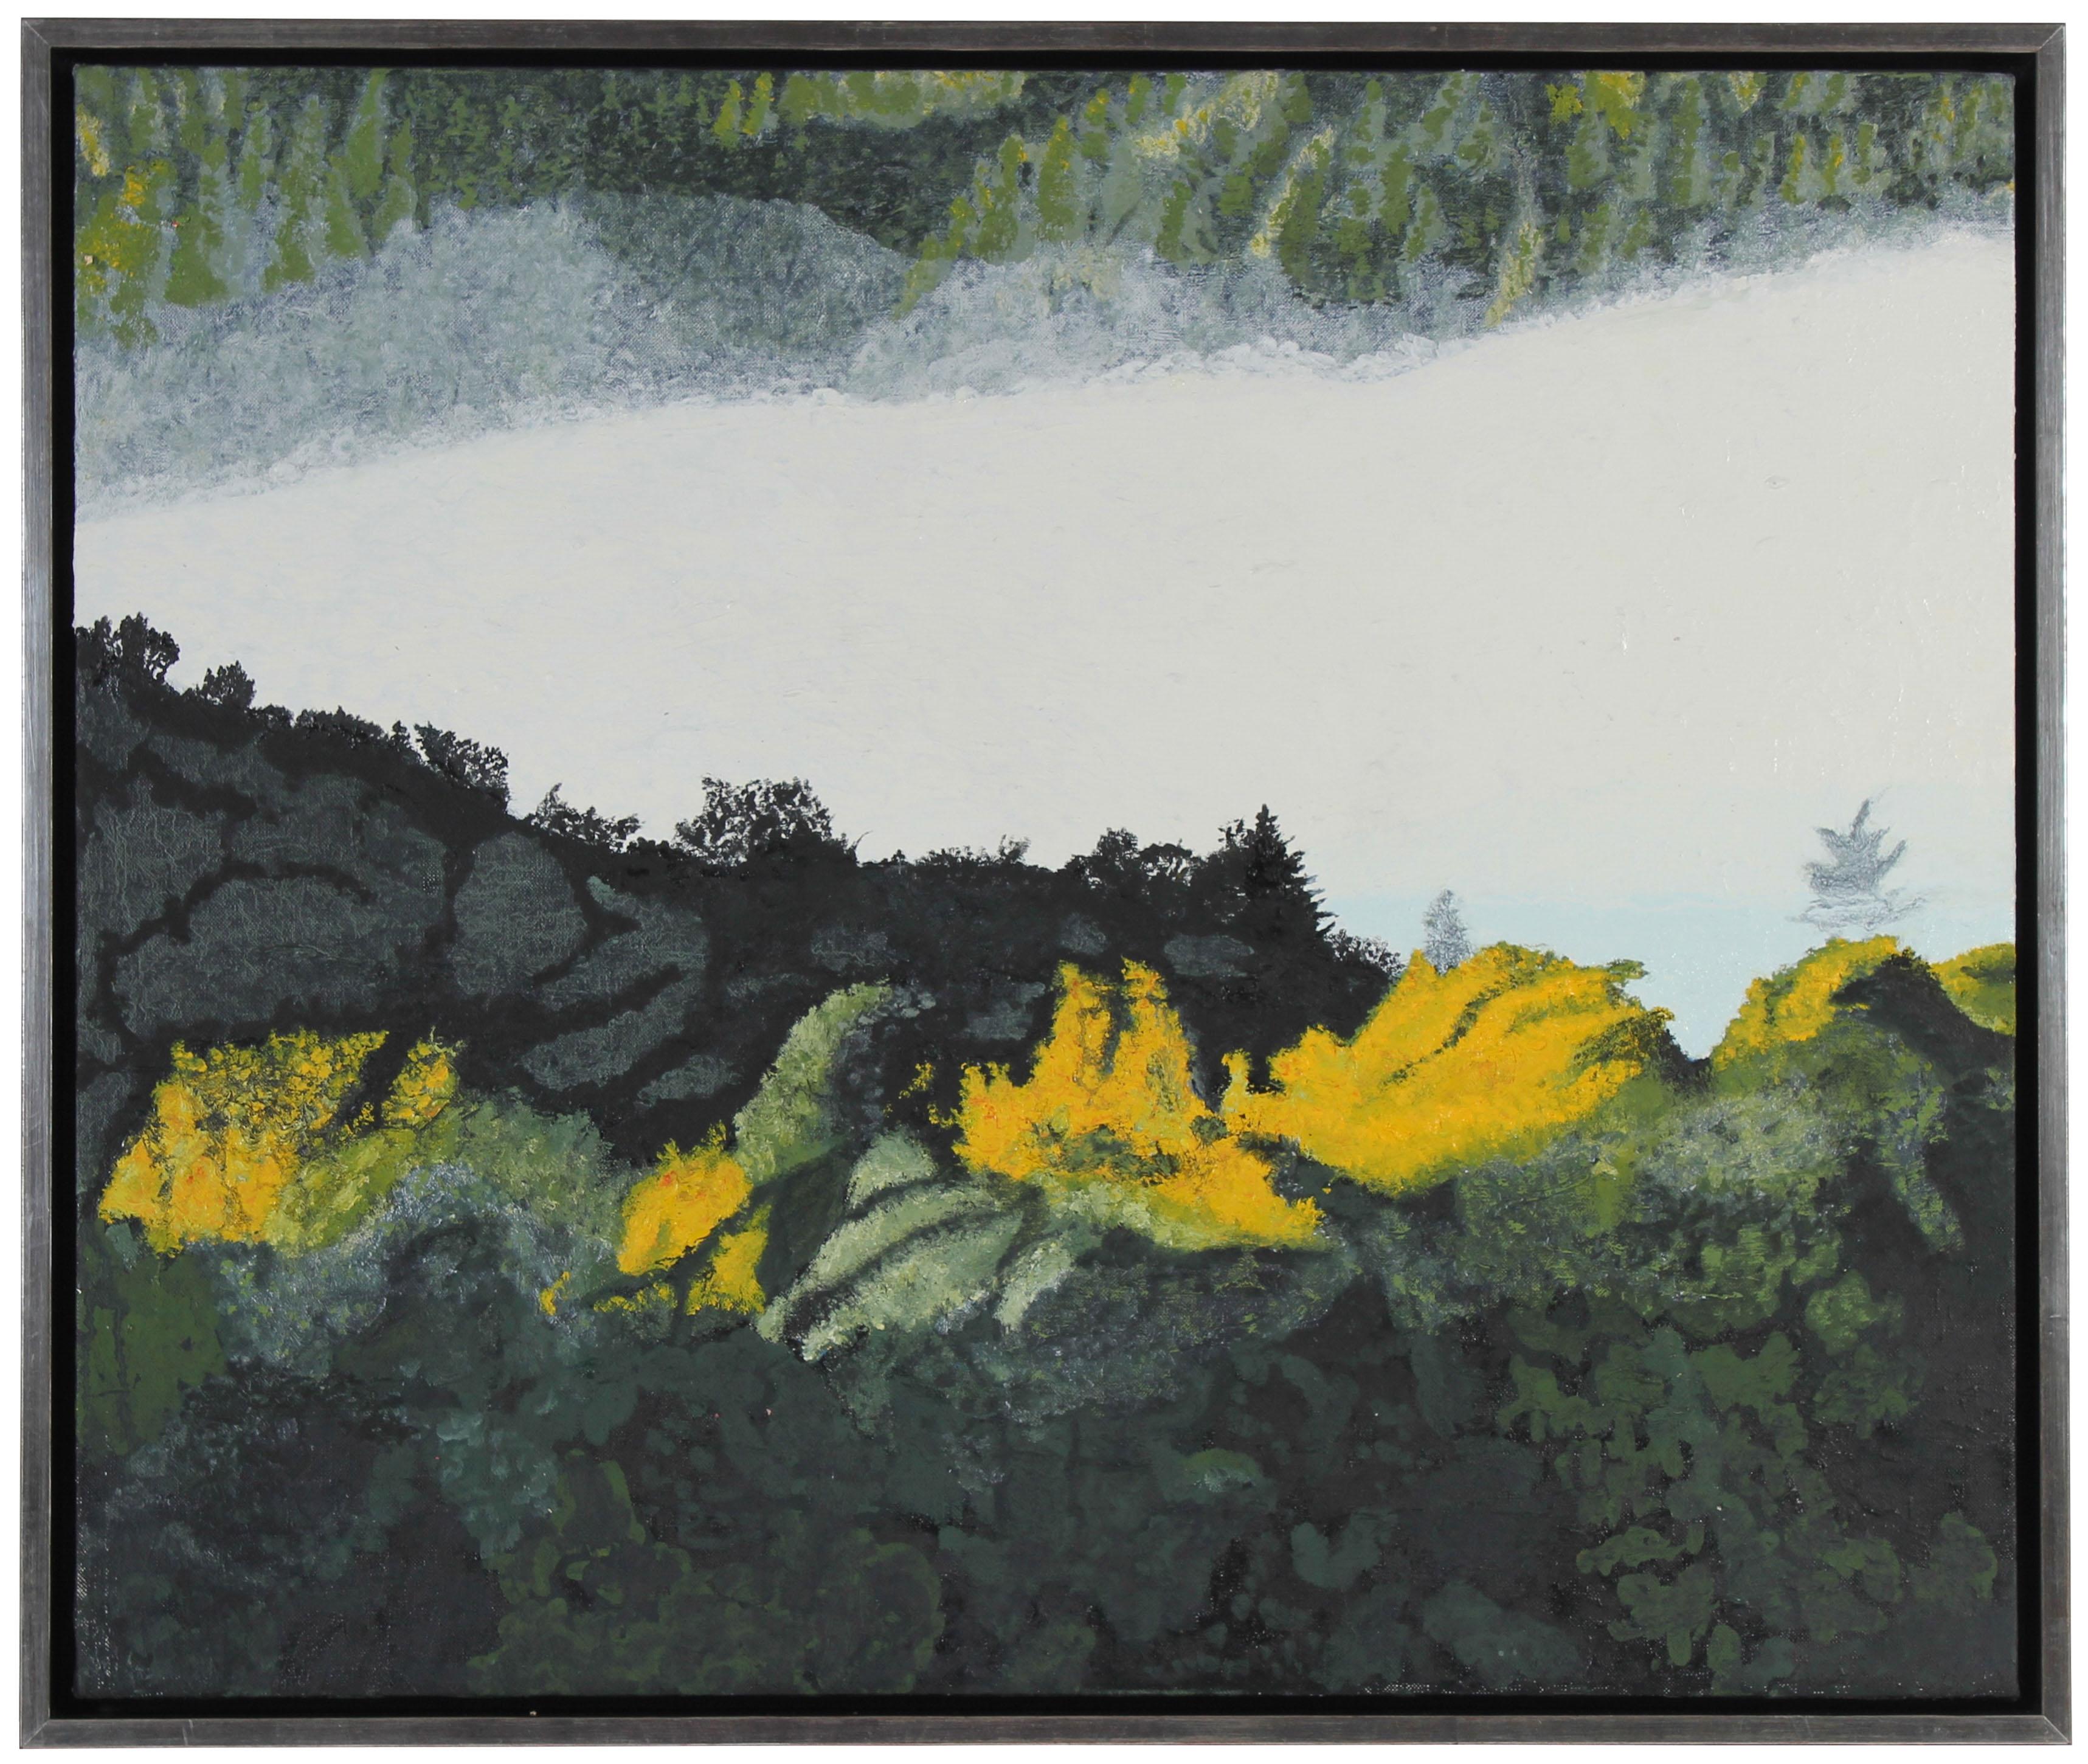 Gaétan Caron Landscape Painting - "Autumn Rays at Dawn" Mendocino, California Landscape, Oil on Canvas